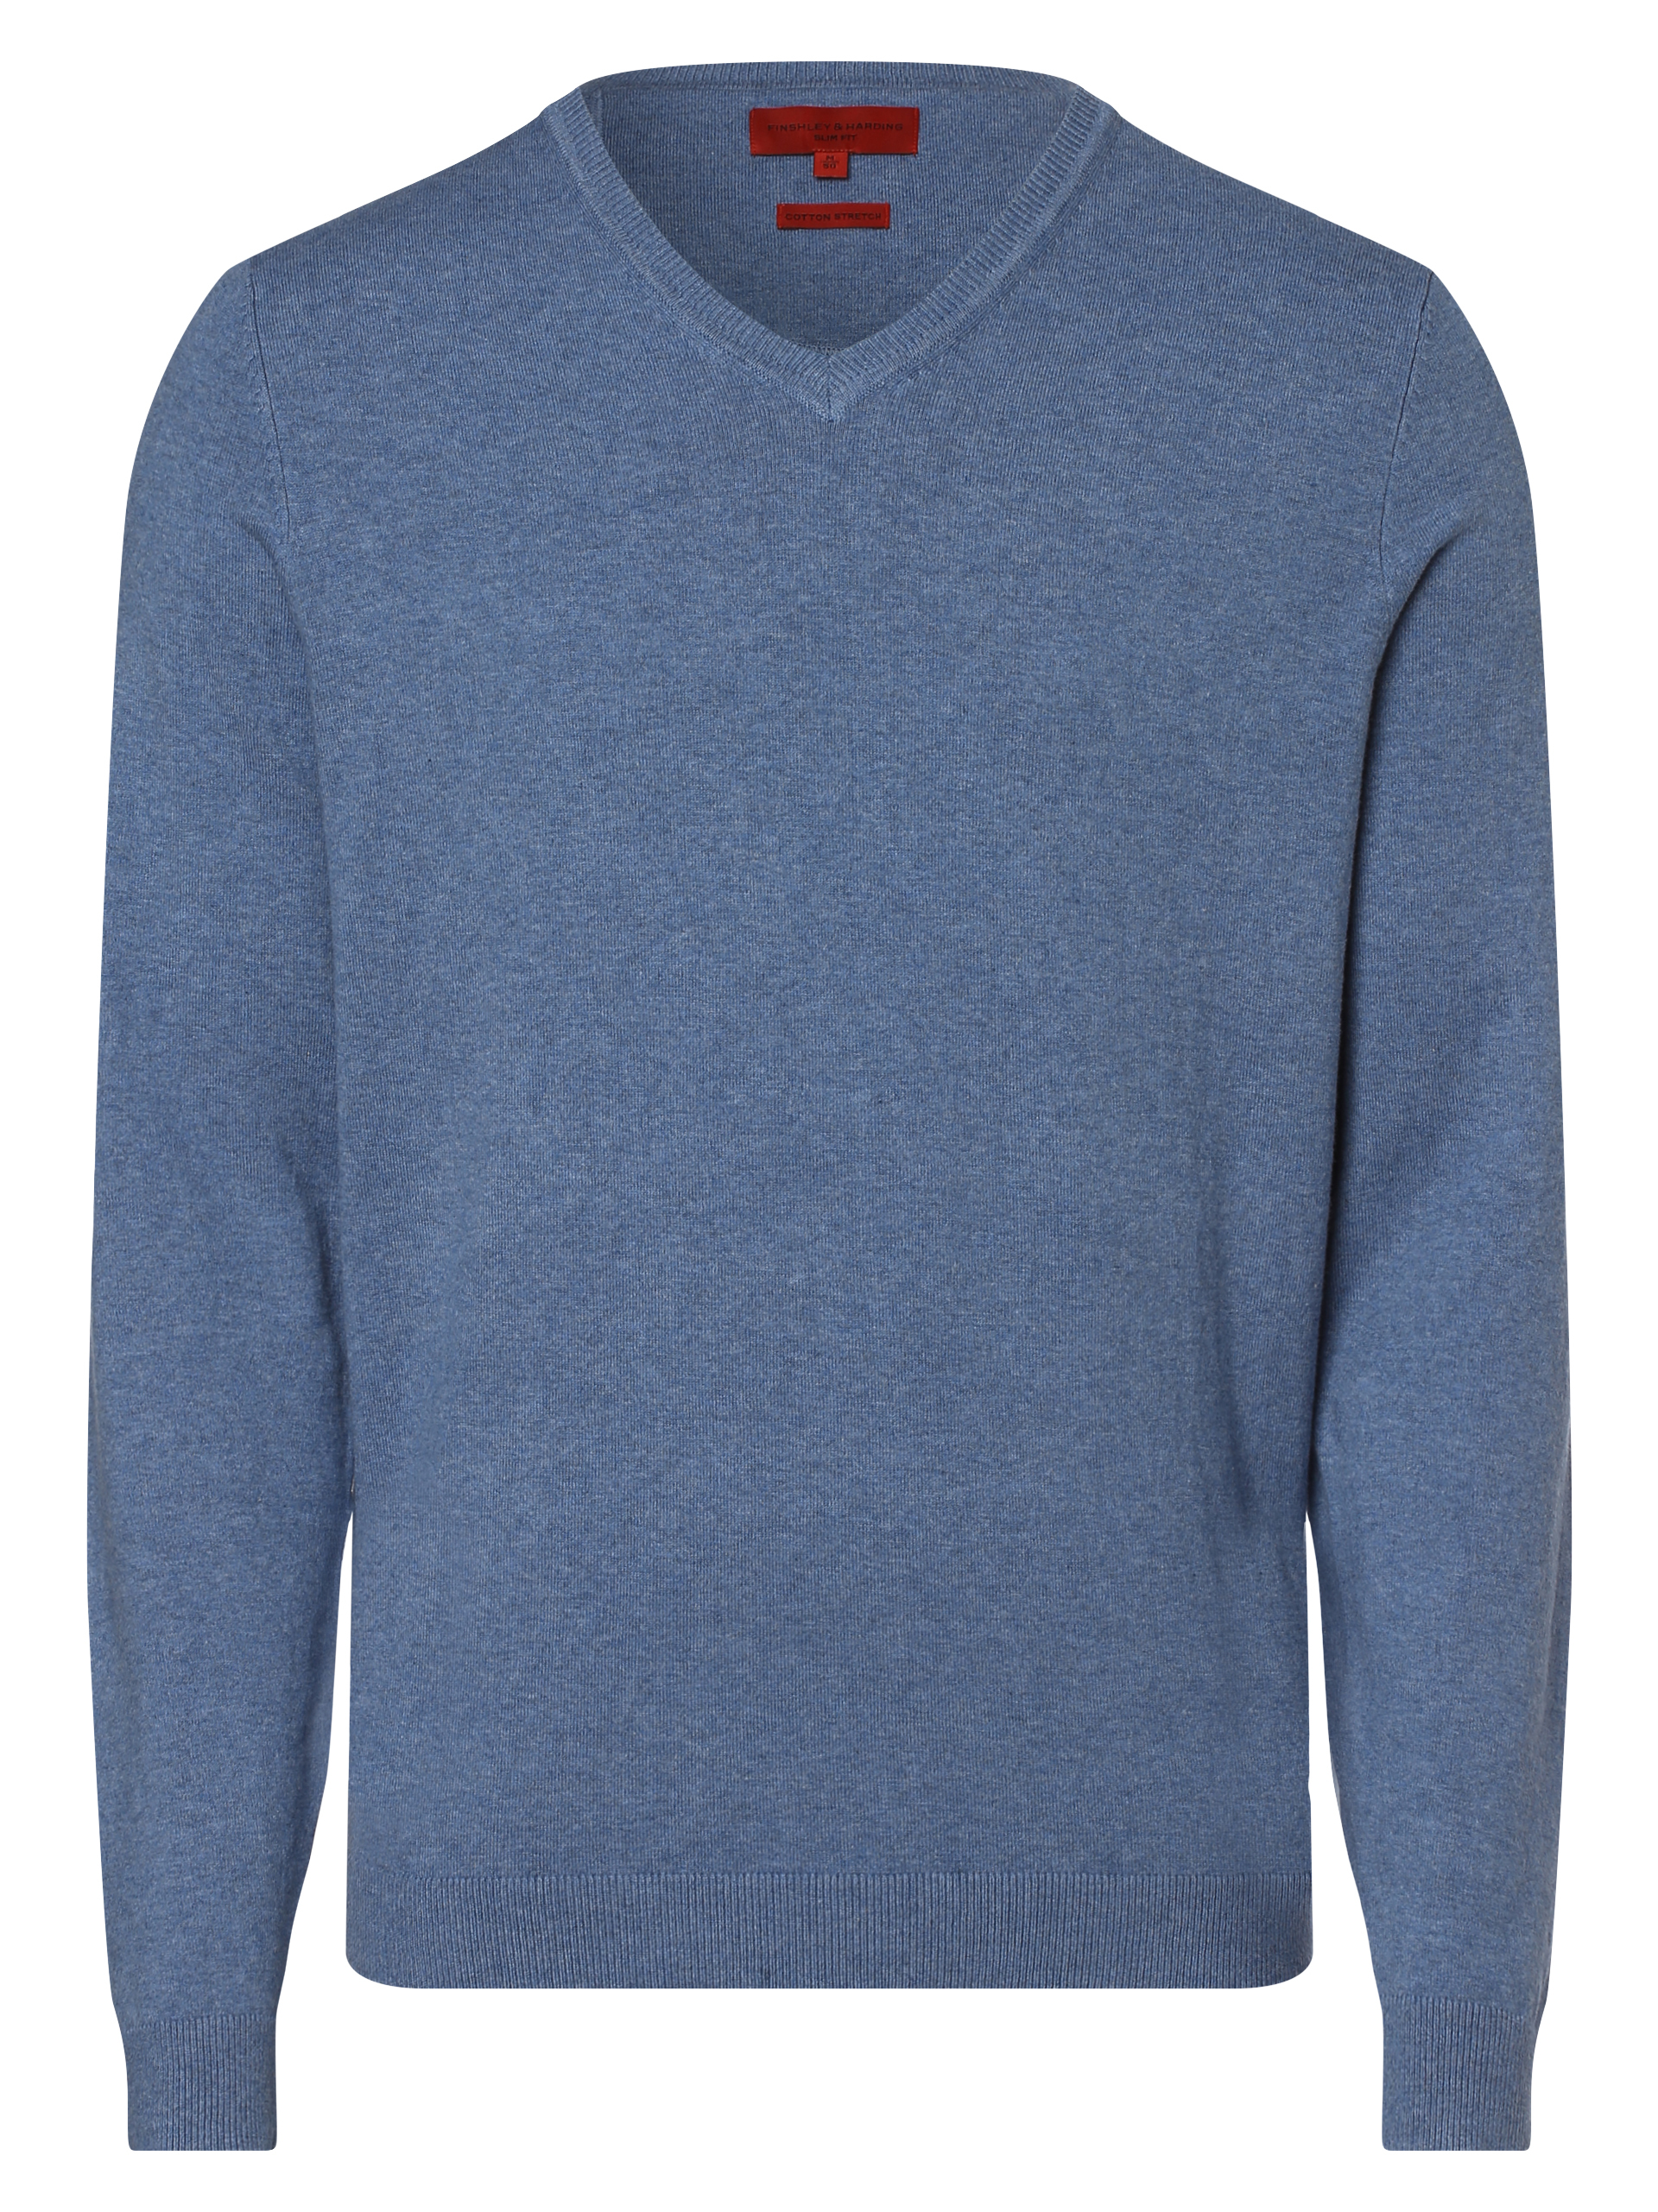 Пуловер Finshley & Harding, синий